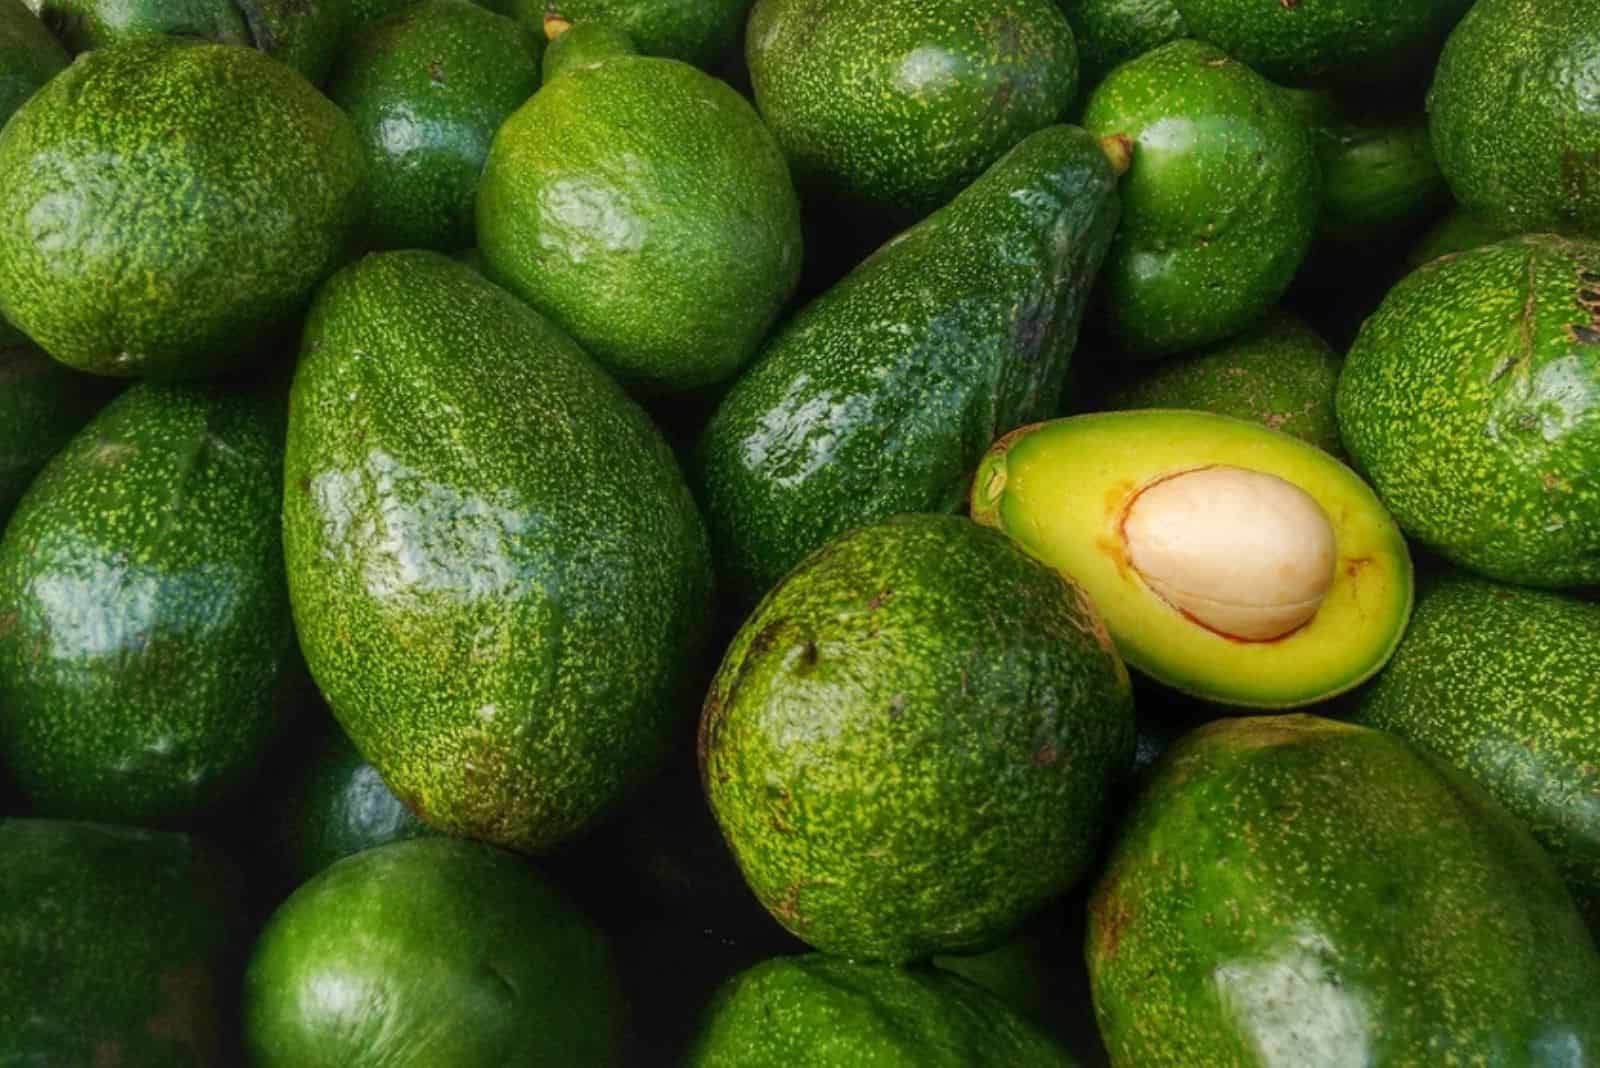 Bunch of green Avocados